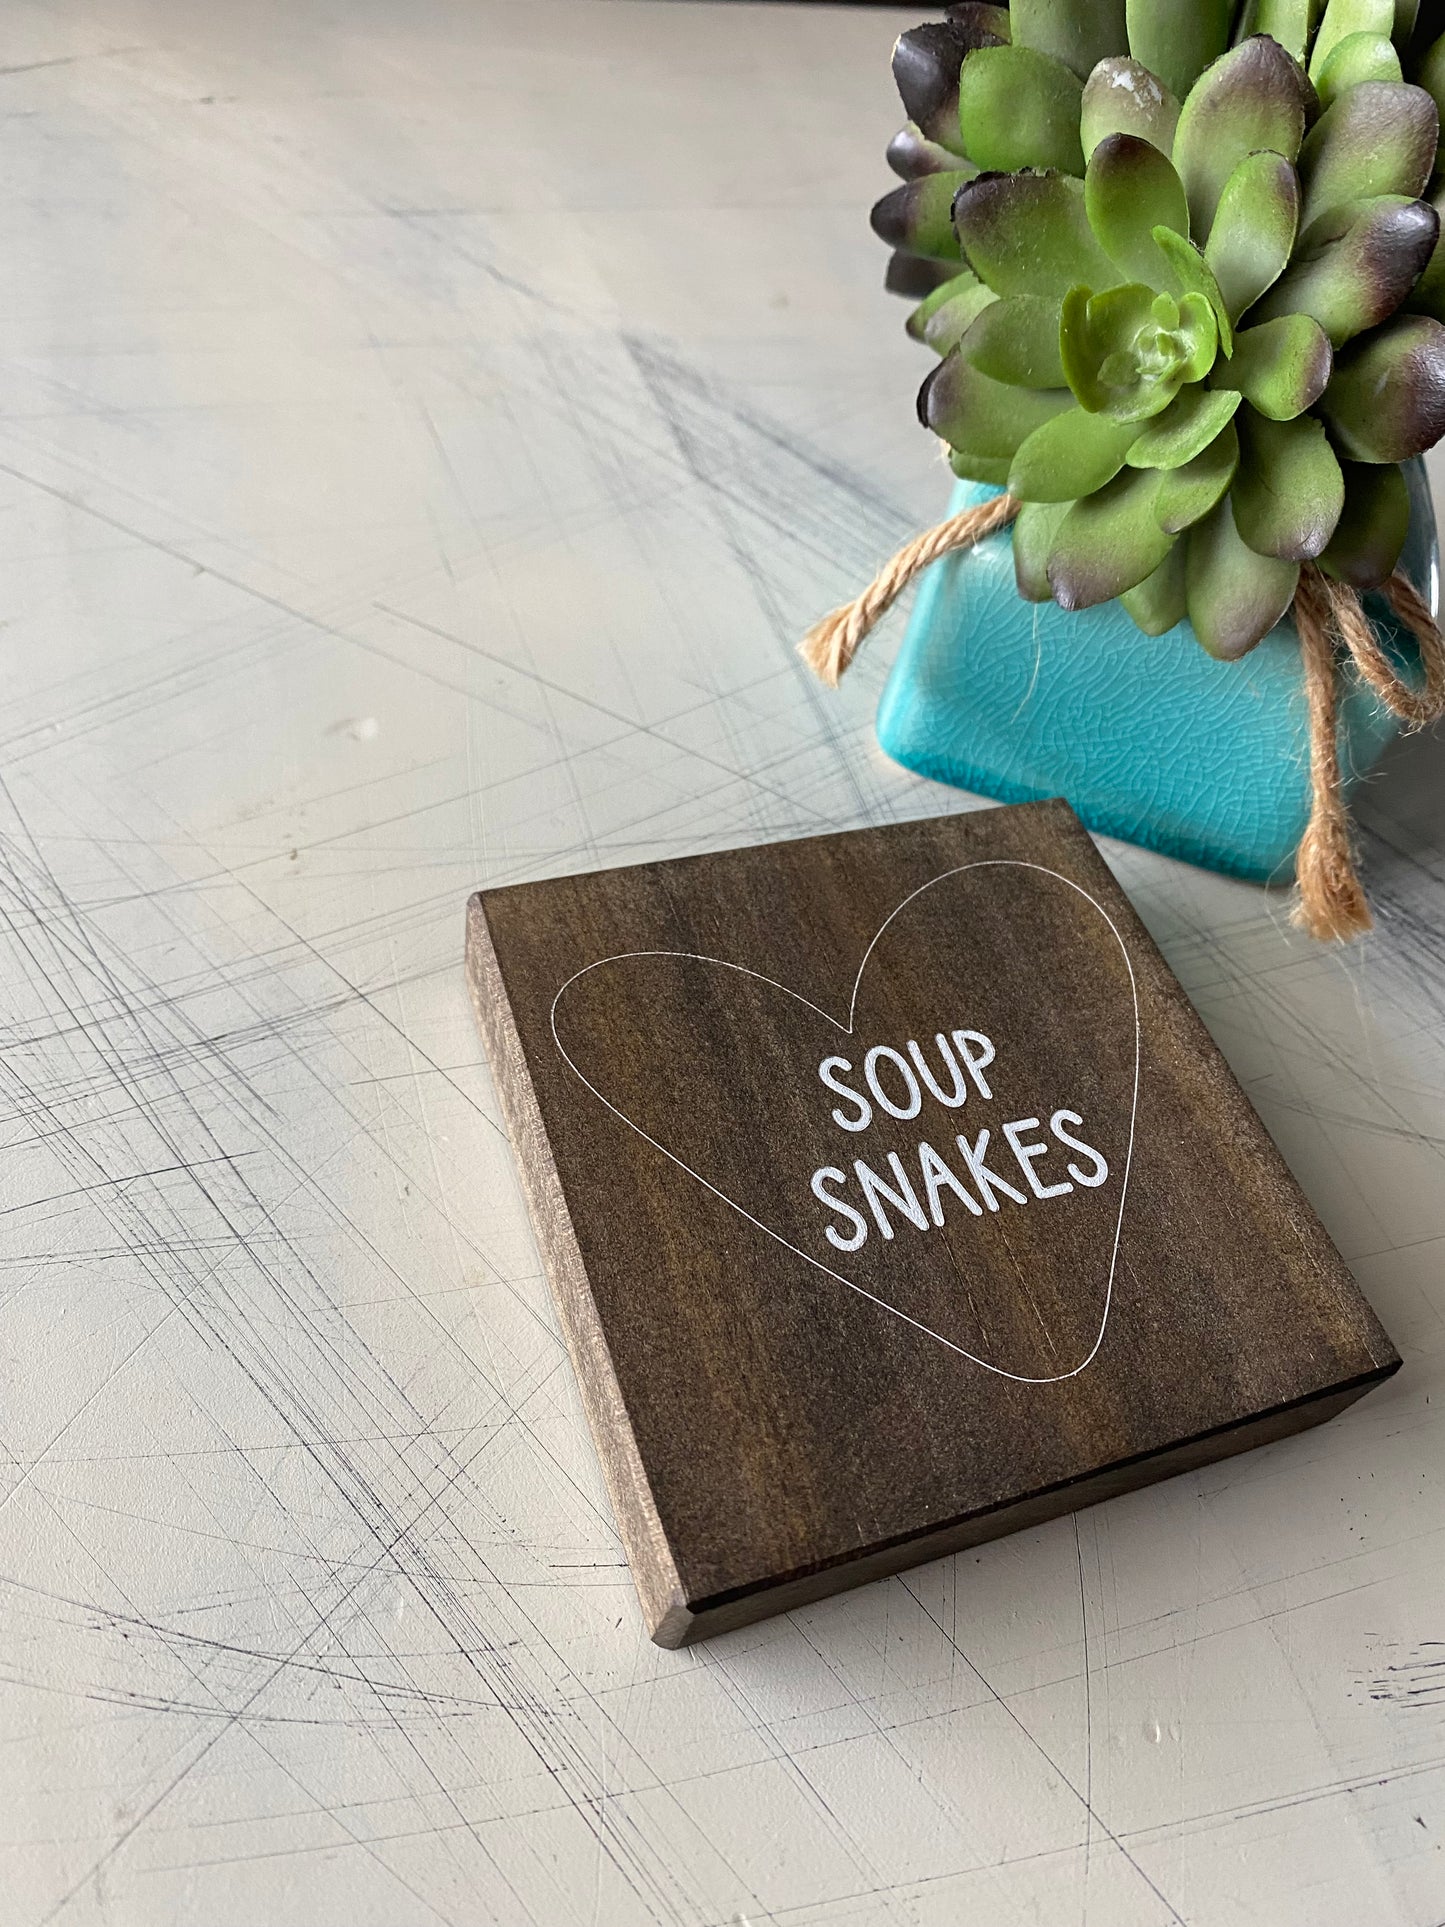 soup snakes - Novotny Designs - mini wood sign